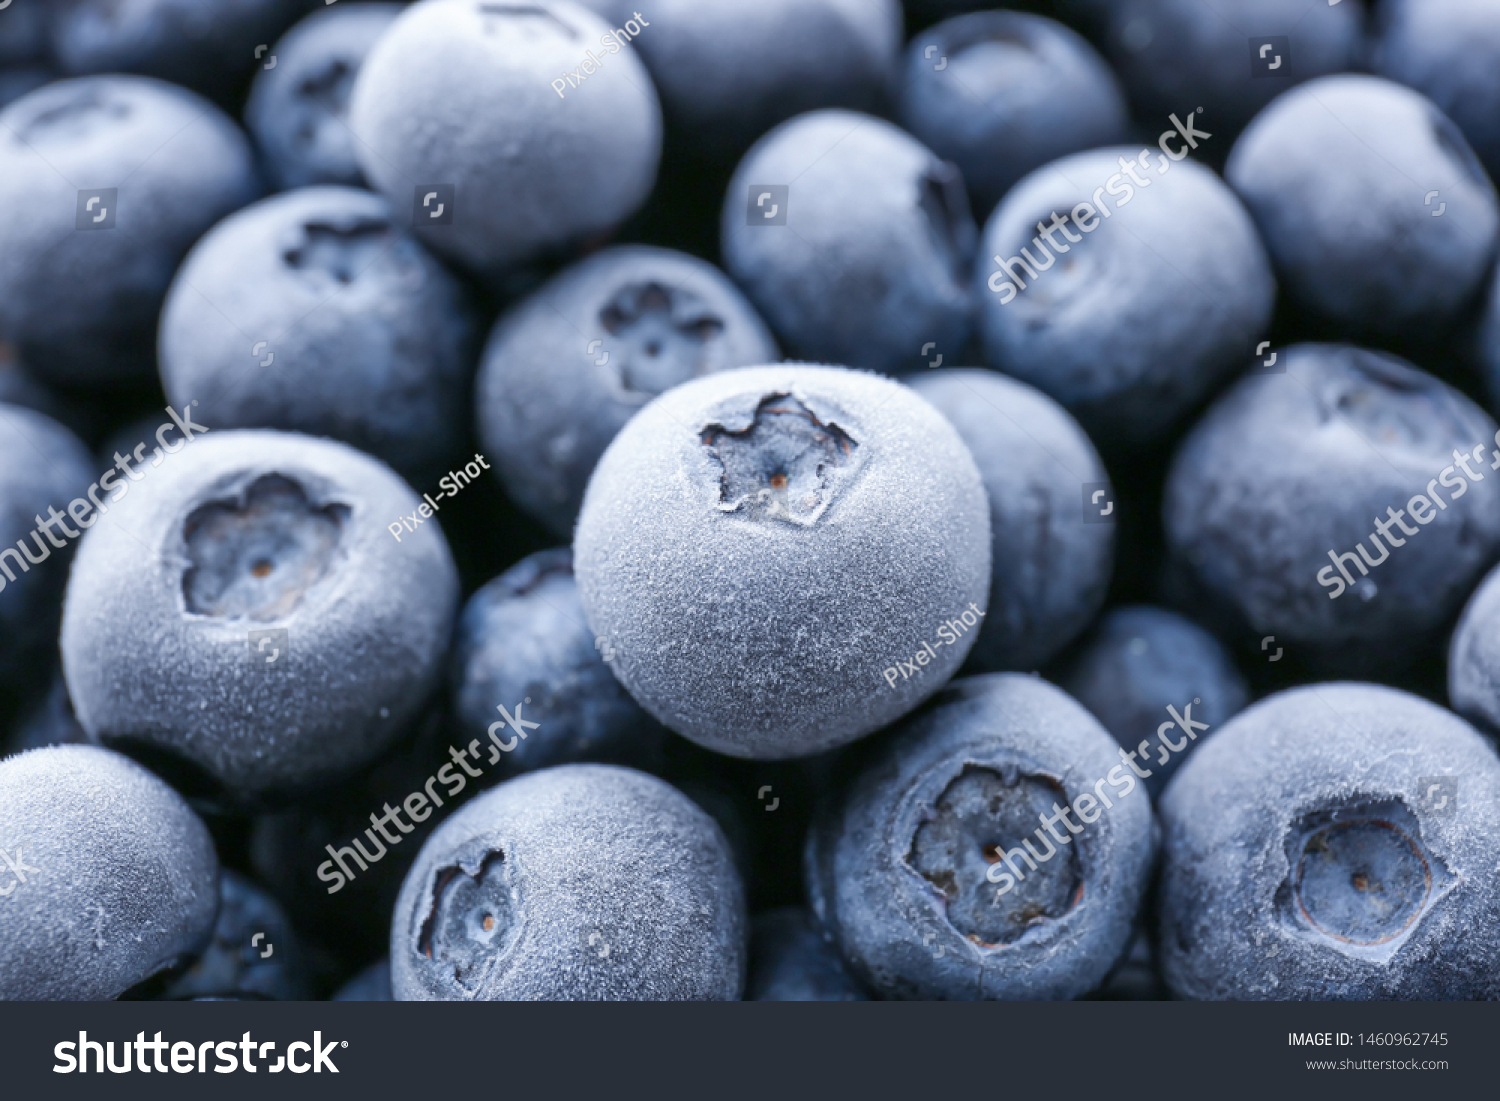 Tasty frozen blueberries, closeup view #1460962745